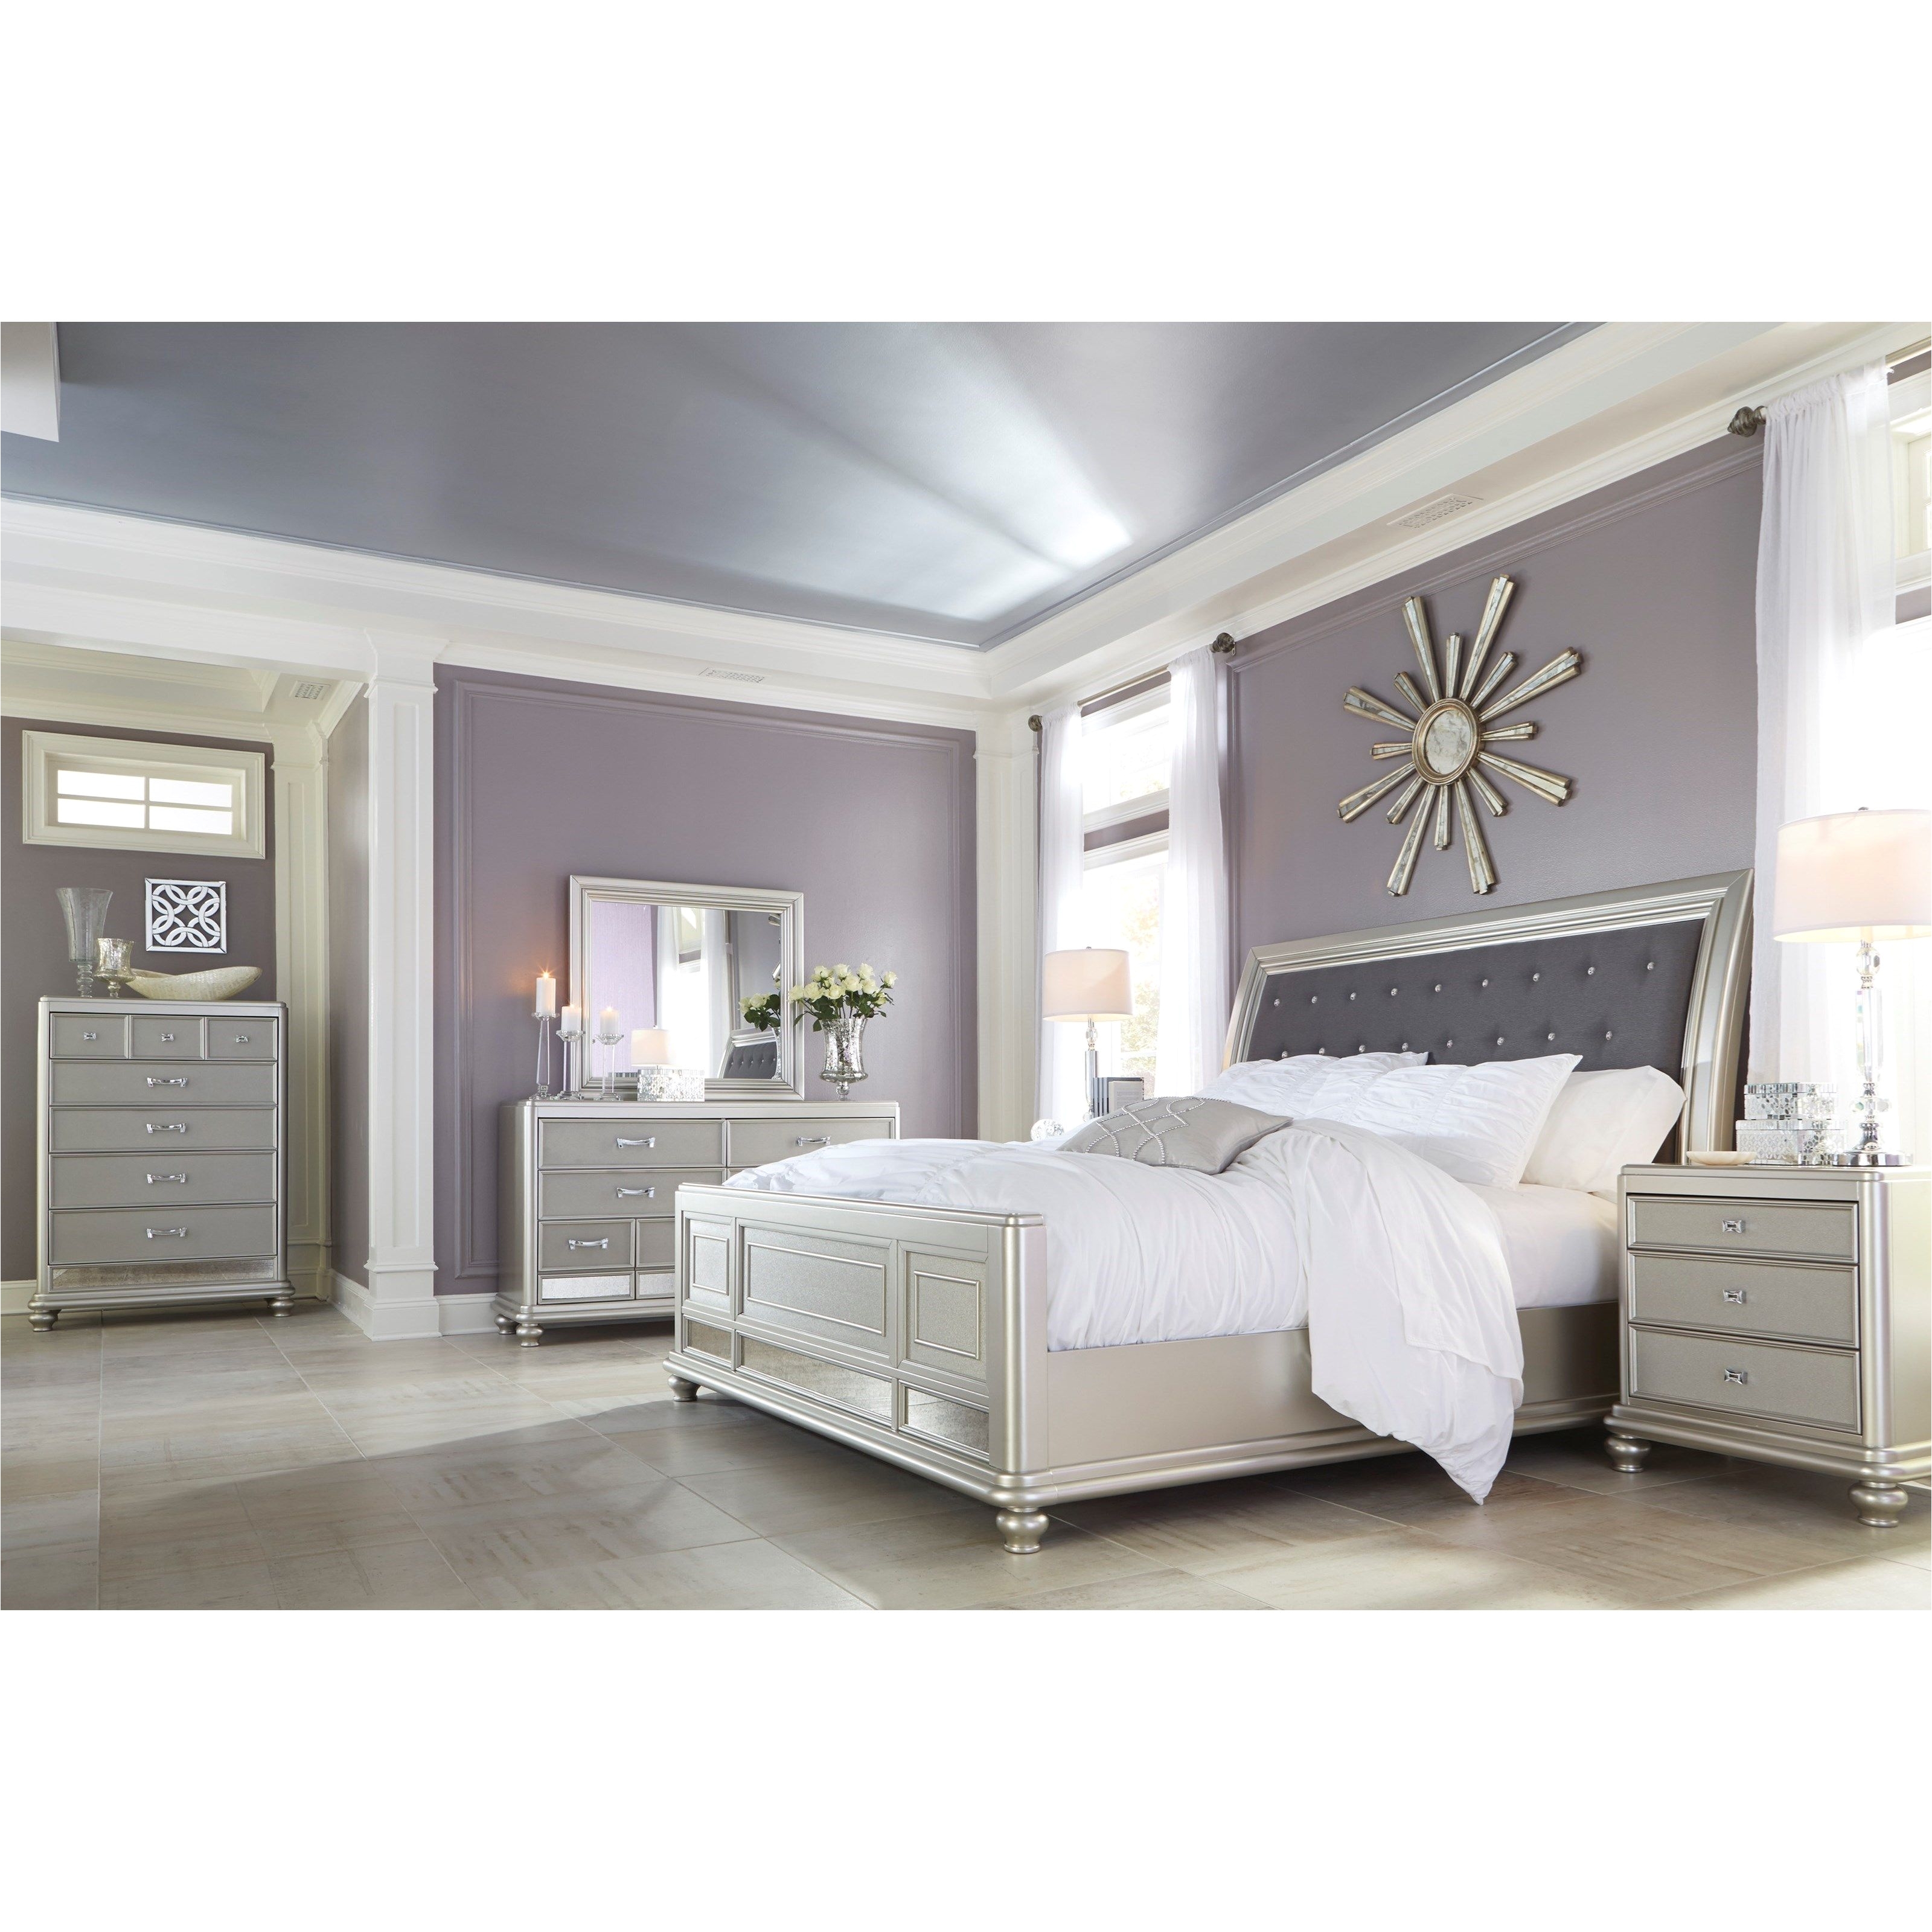 Queen Bedroom Sets Coralayne Queen Bedroom Group by Signature Design by ashley Van